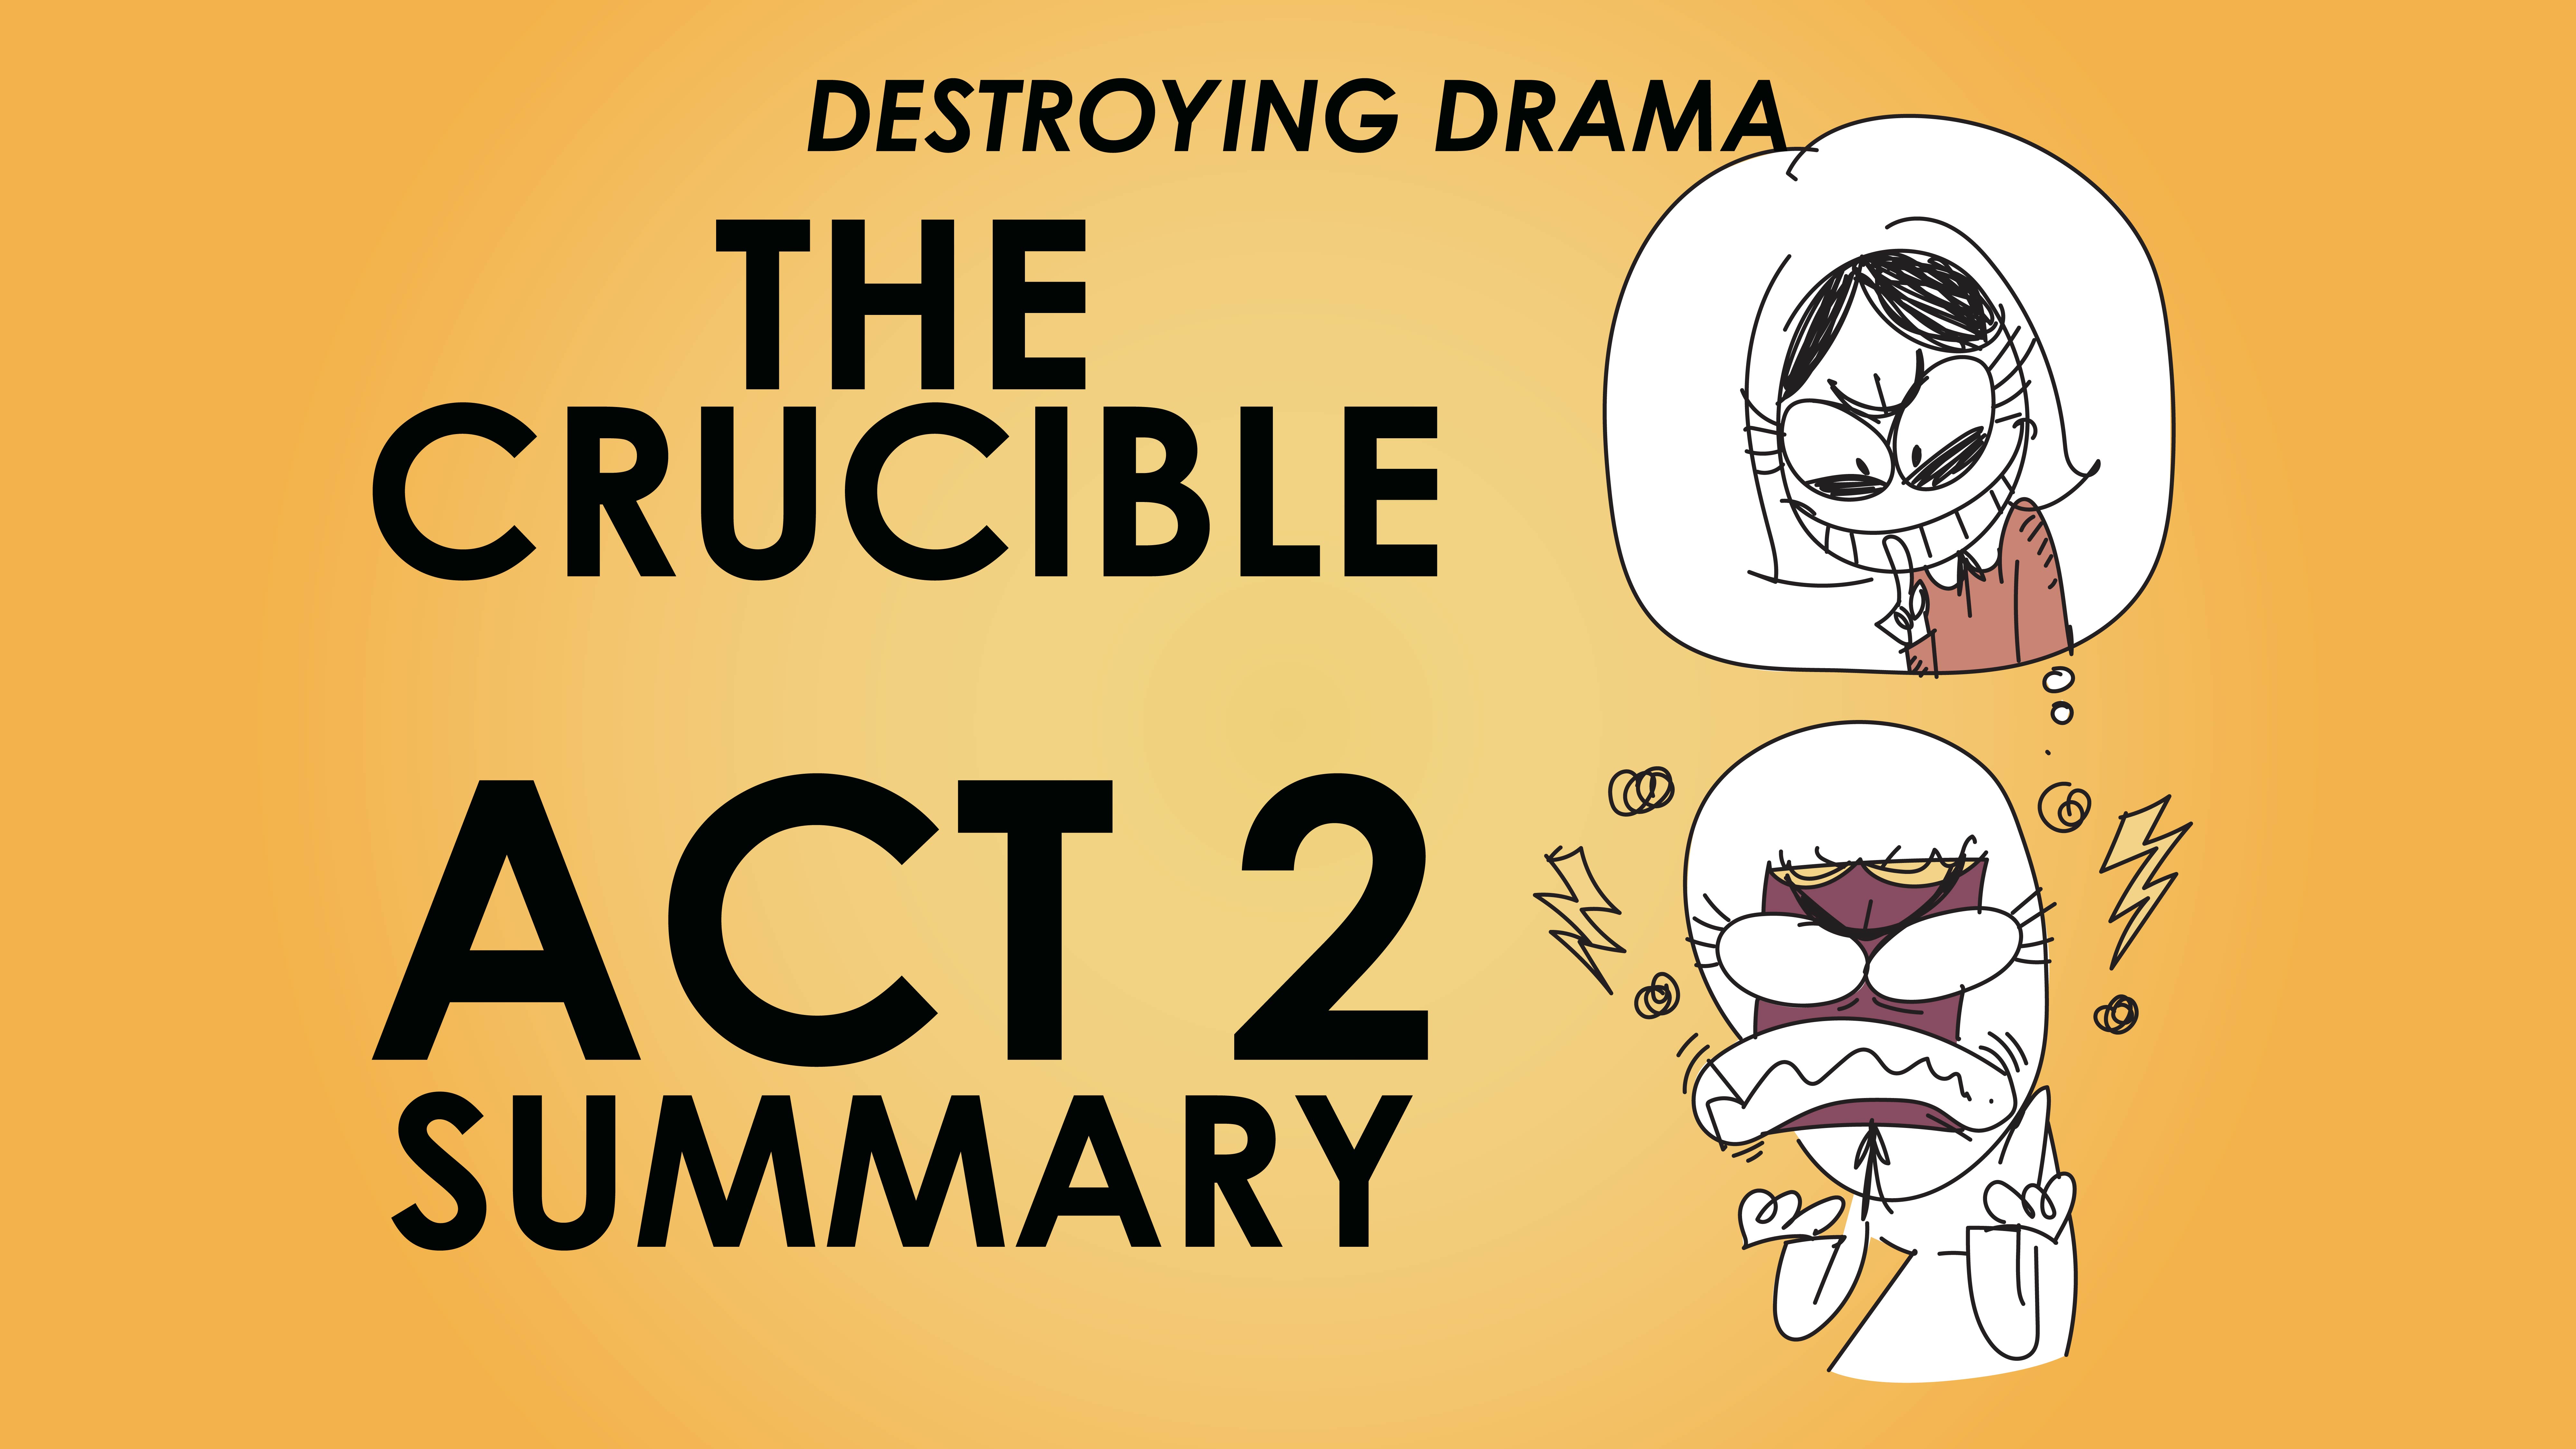 The Crucible - Arthur Miller - Act 2 Summary - Destroying Drama Series 